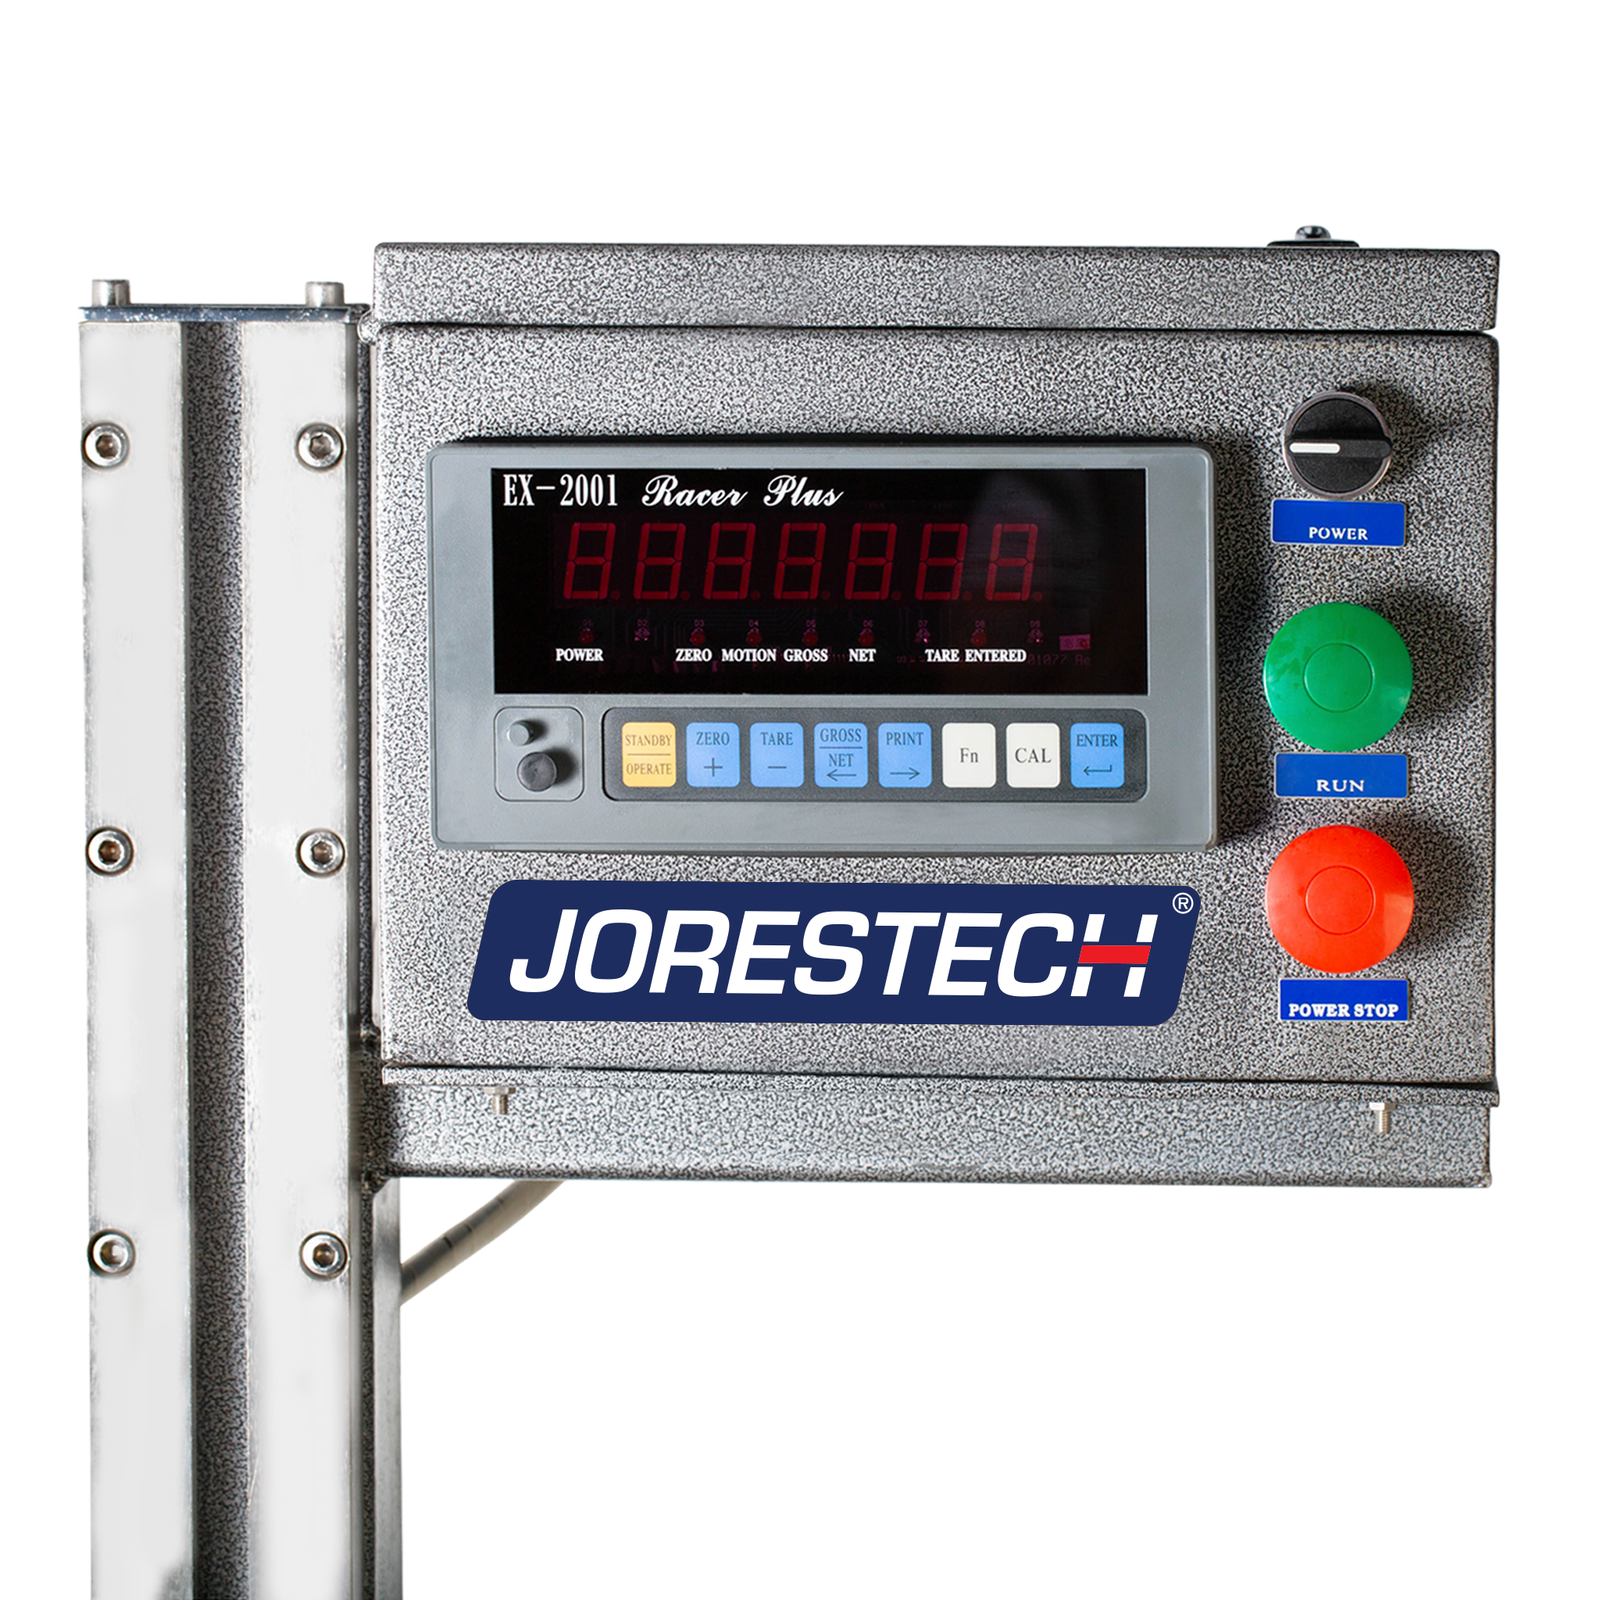 Closeup of the digital control panel of the JORES TECHNOLOGIES® liquid net weight filler